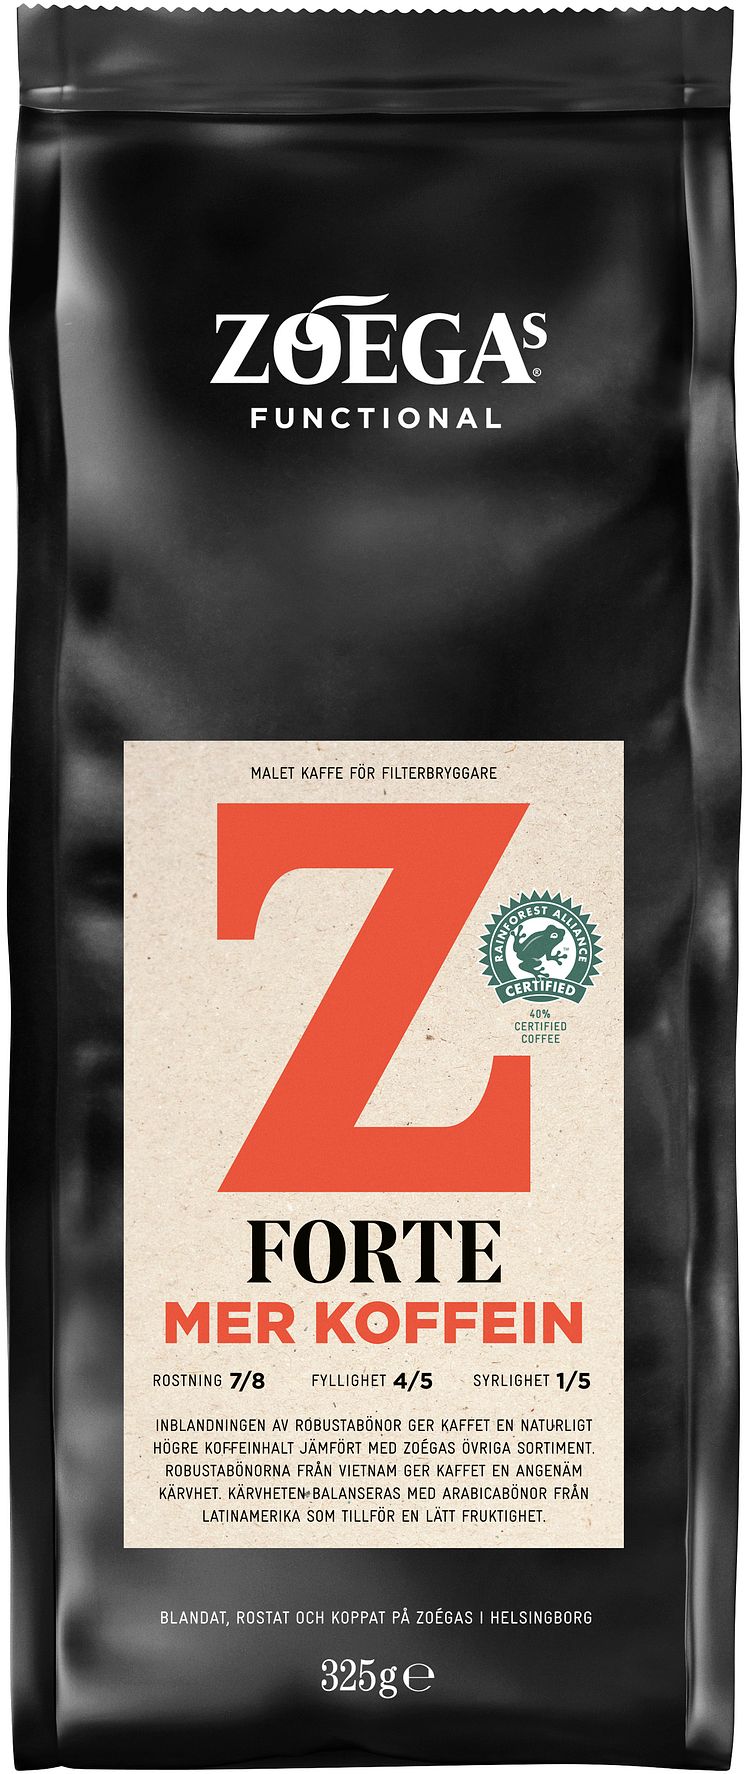 Zoégas Forte Mer Koffein